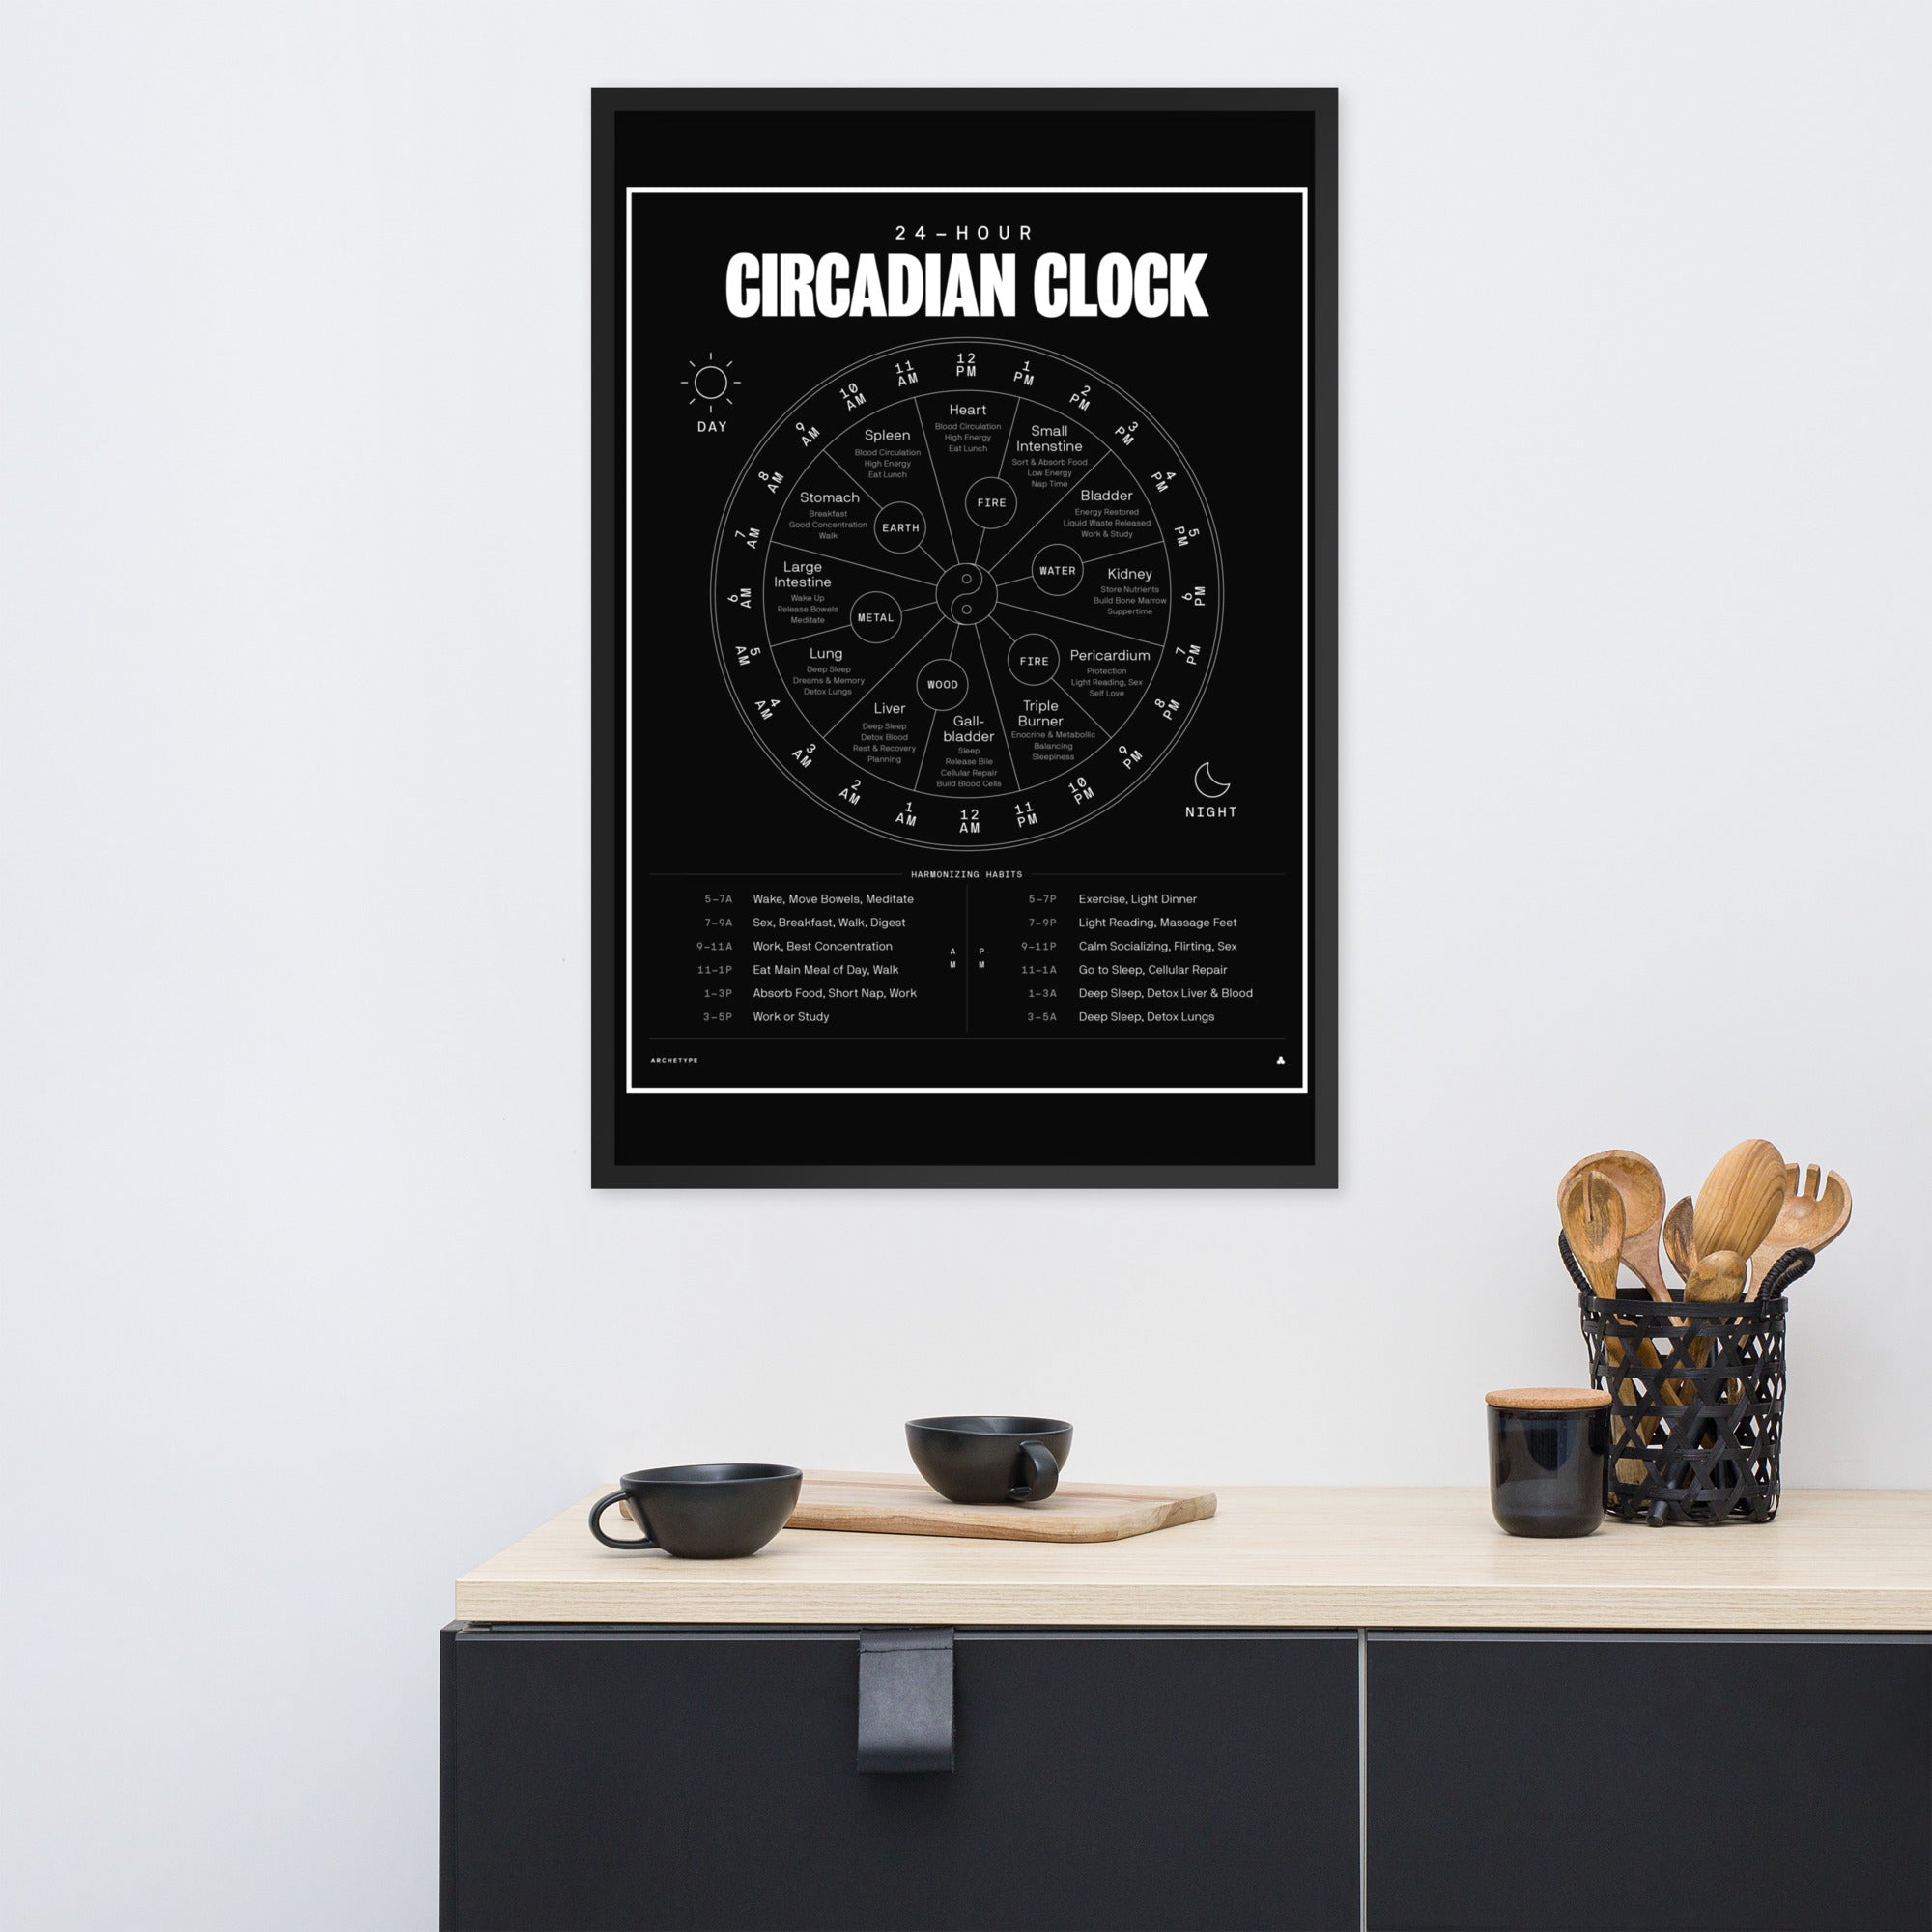 24-Hour Circadian Clock